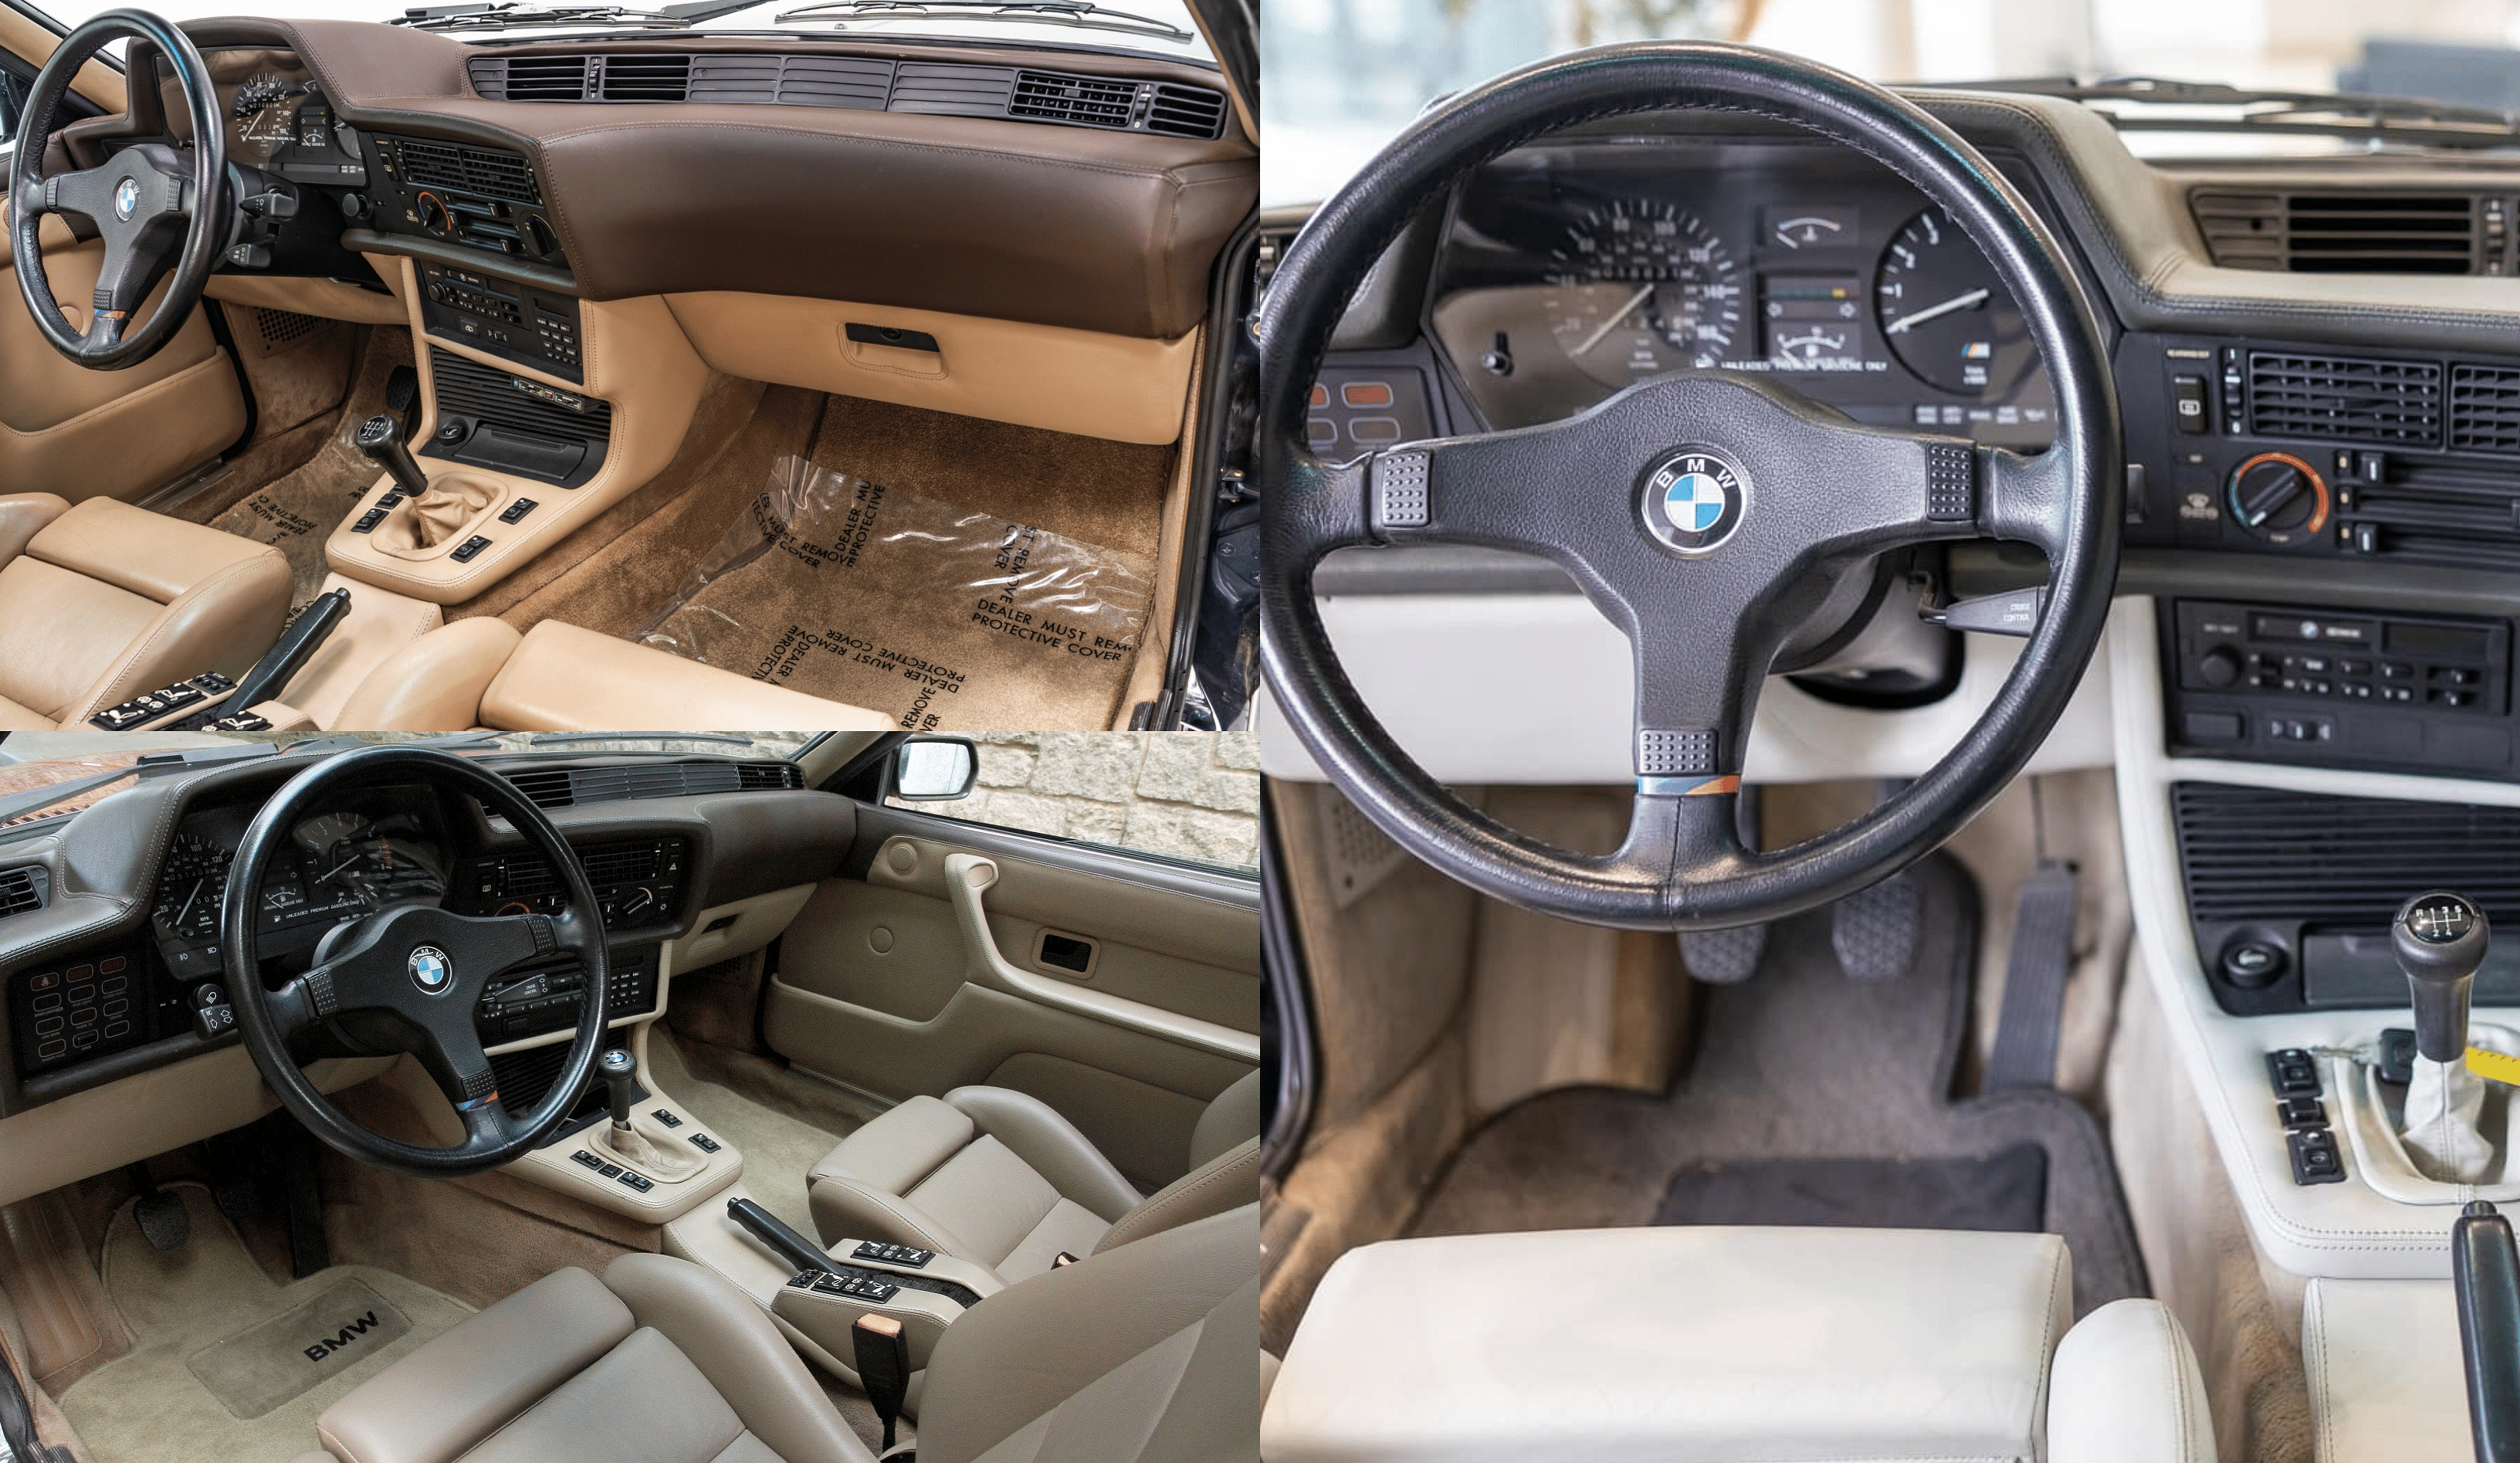 BMW E24 M6 cabin, interior, dashboard, steering wheel